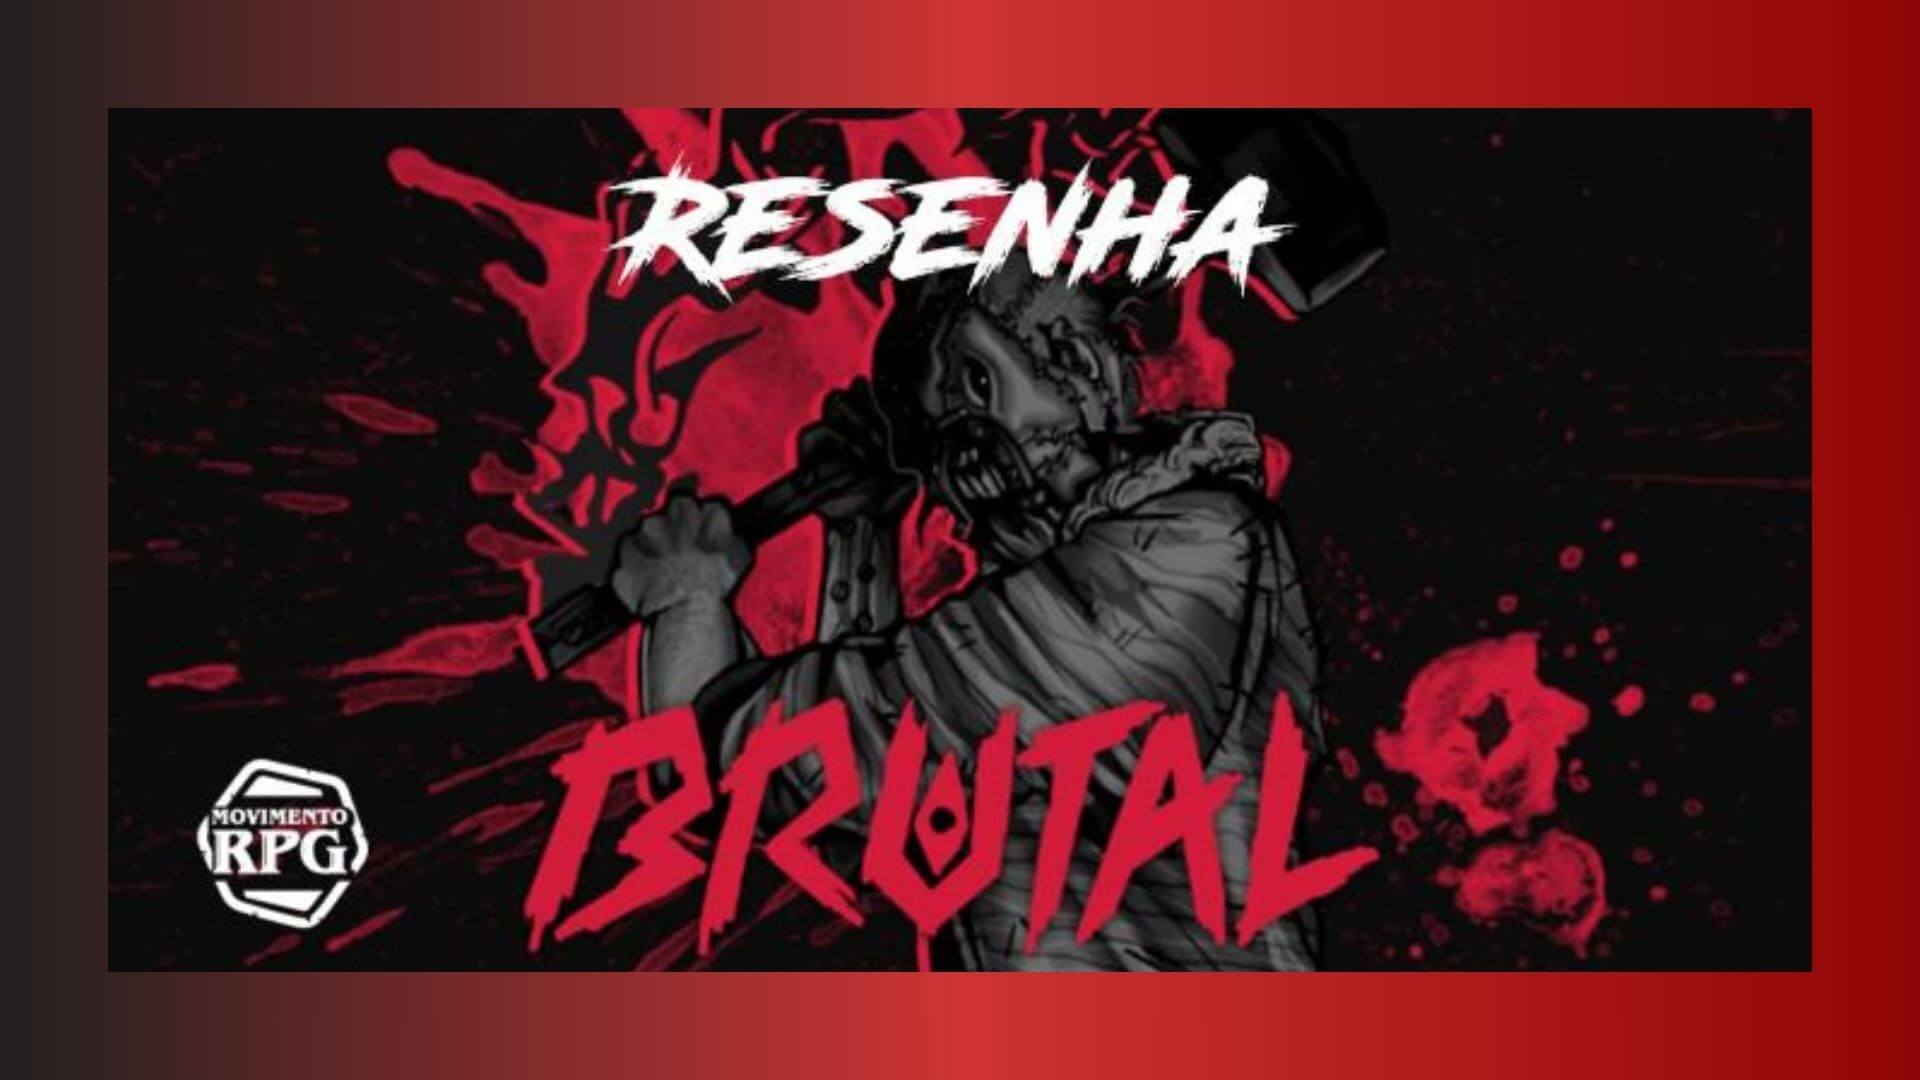 Brutal - Resenha